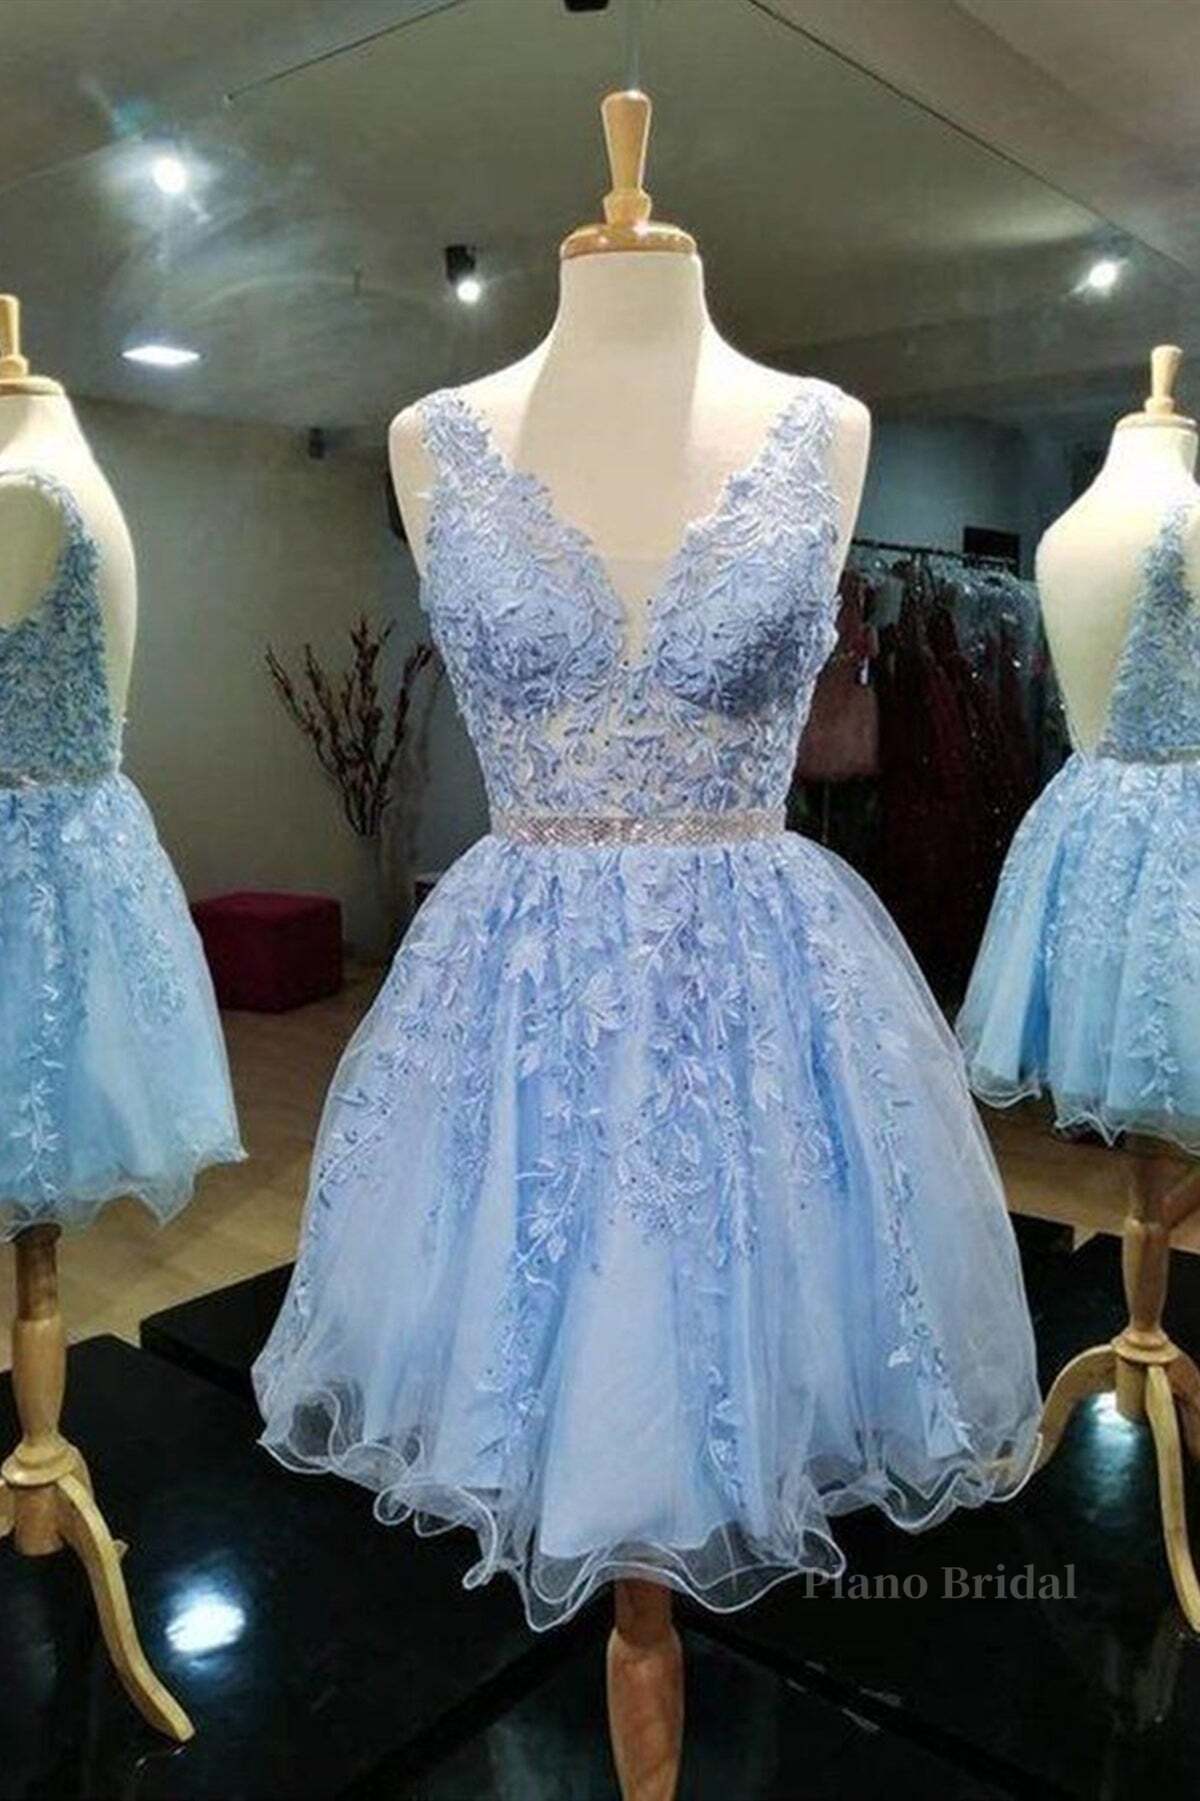 V Neck Short Blue Lace Prom Dresses, Short Blue Lace Formal Homecoming Dresses